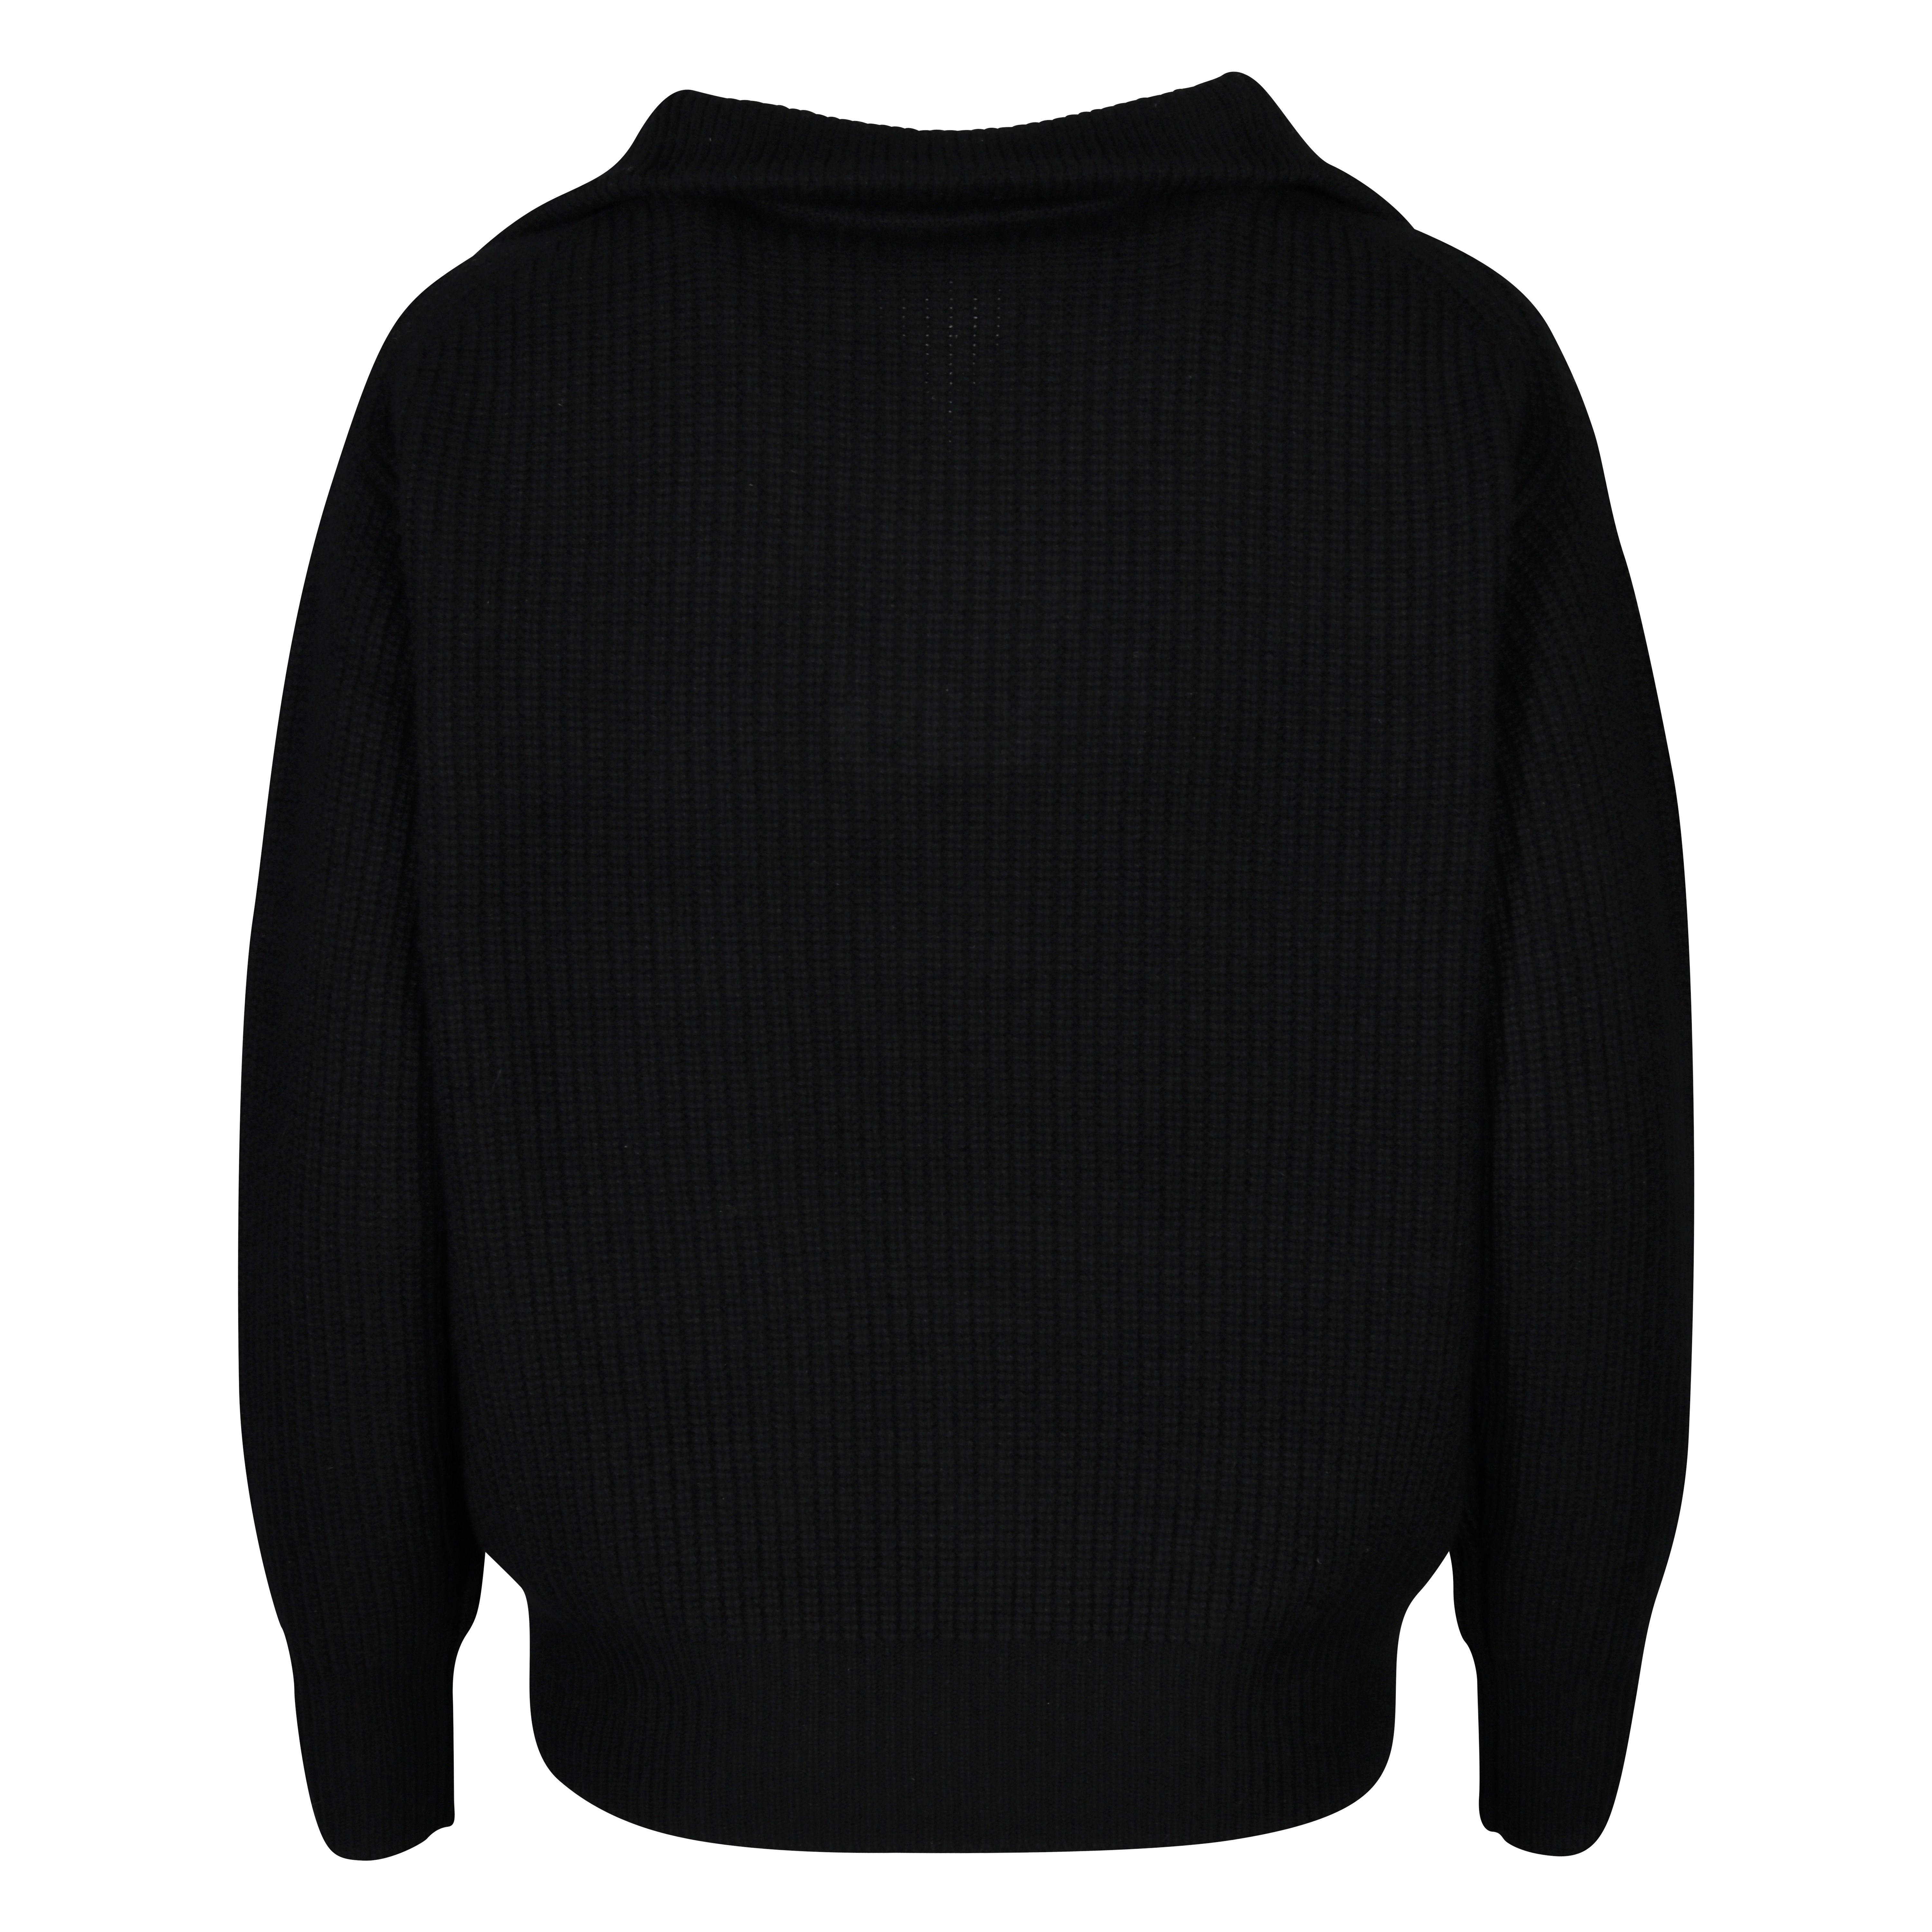 Nili Lotan Hester Half Zip Cashmere Sweater in Black S